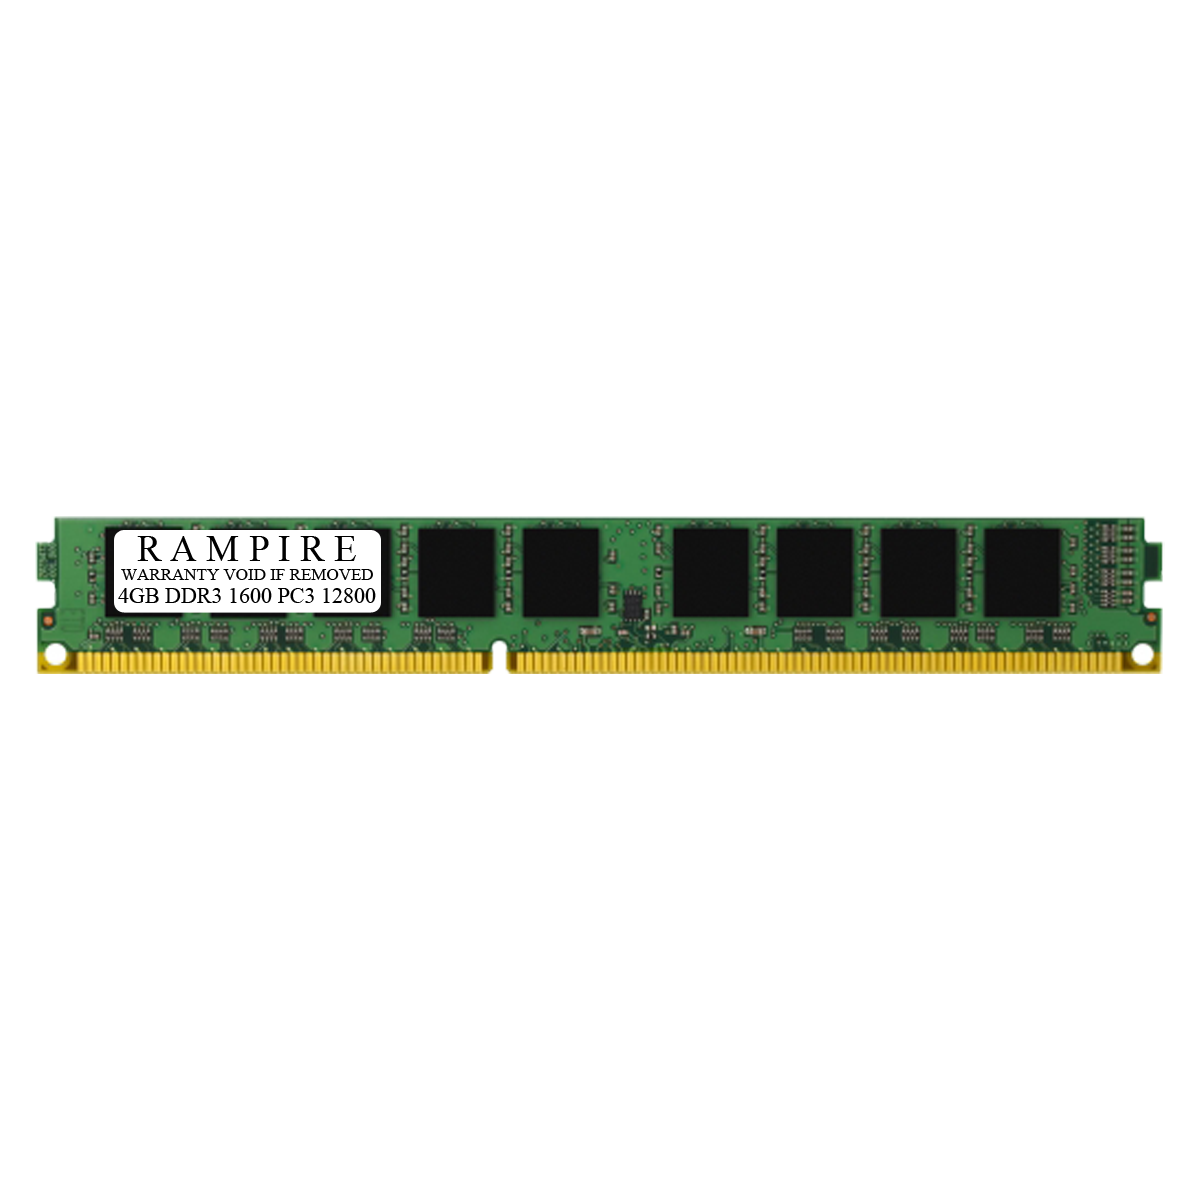 RAMPIRE 4GB DDR3 1600 (PC3 12800) 240-Pin SDRAM 2Rx8 VLP (Low Profile) 1.5V ECC Unregistered Server Memory